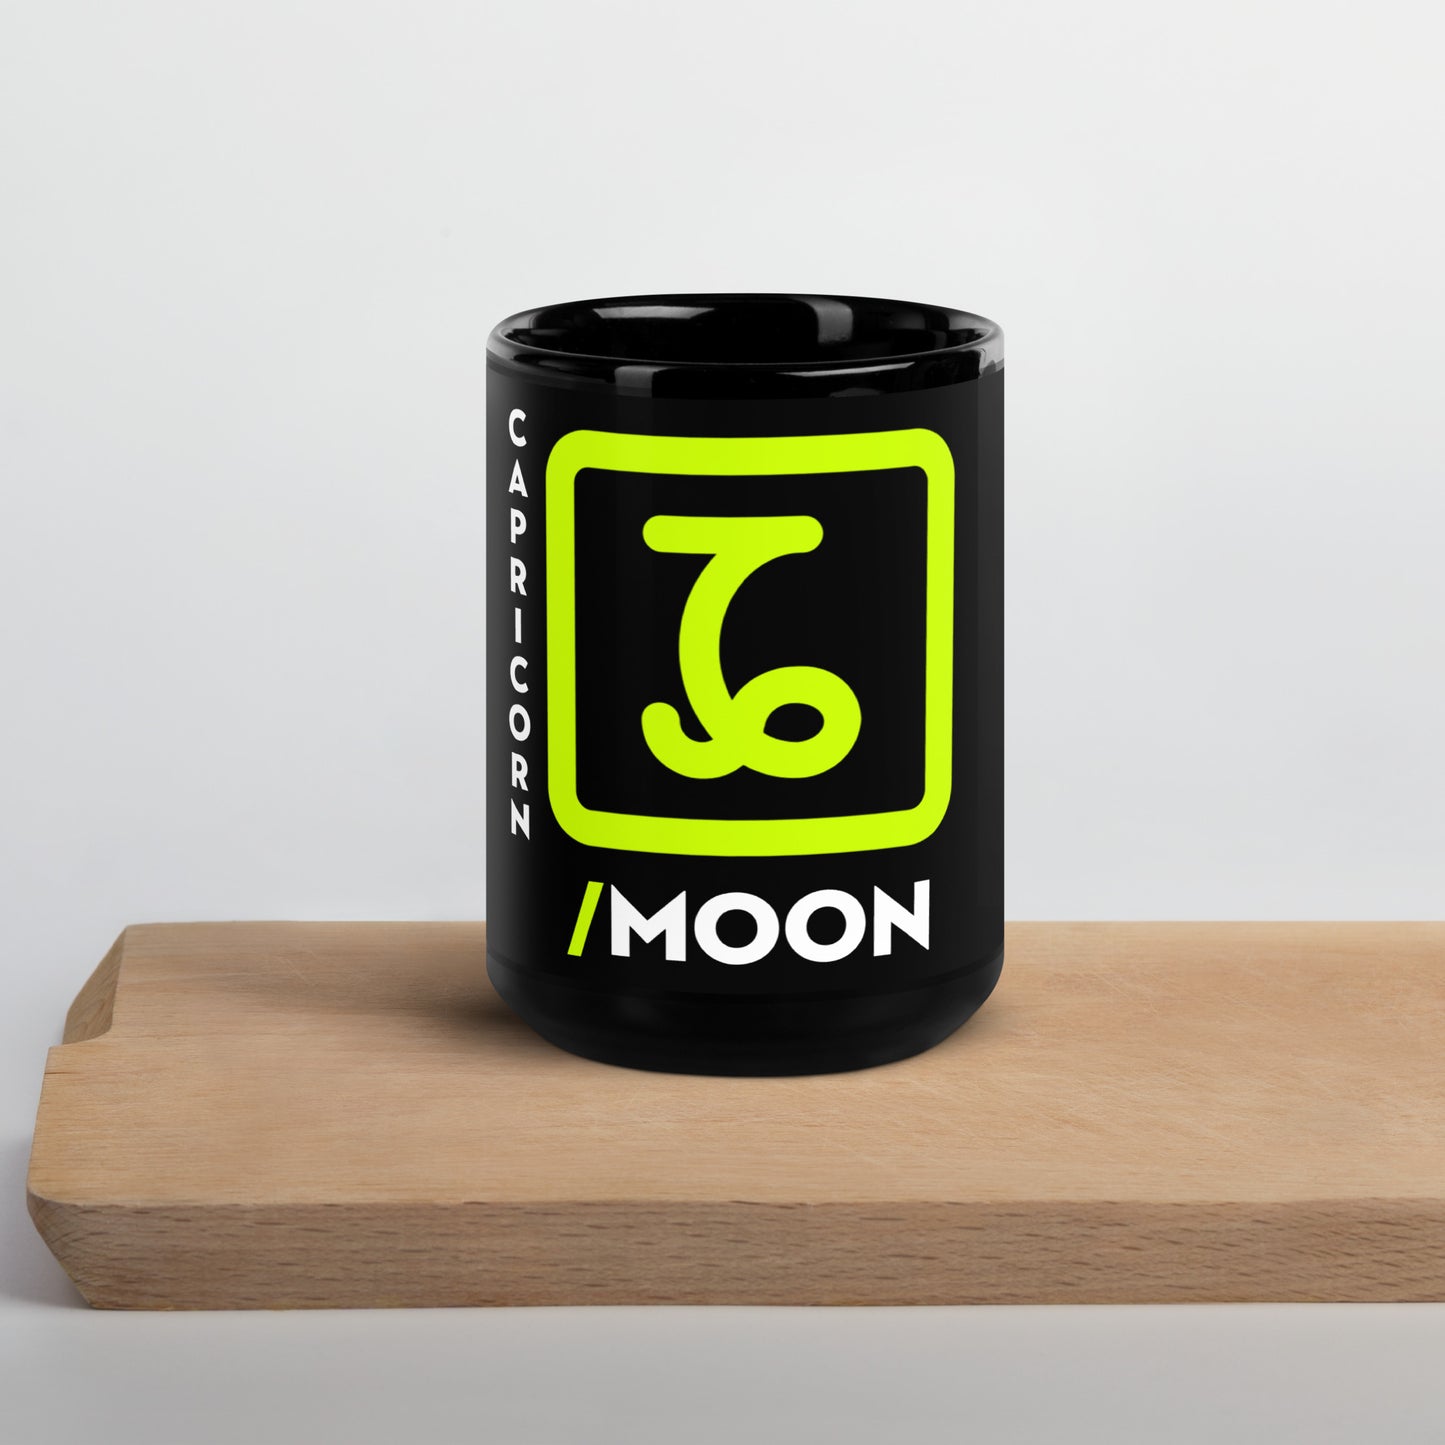 111 LIFE - CAPRICORN MOON ZODIAC - Black Glossy Mug